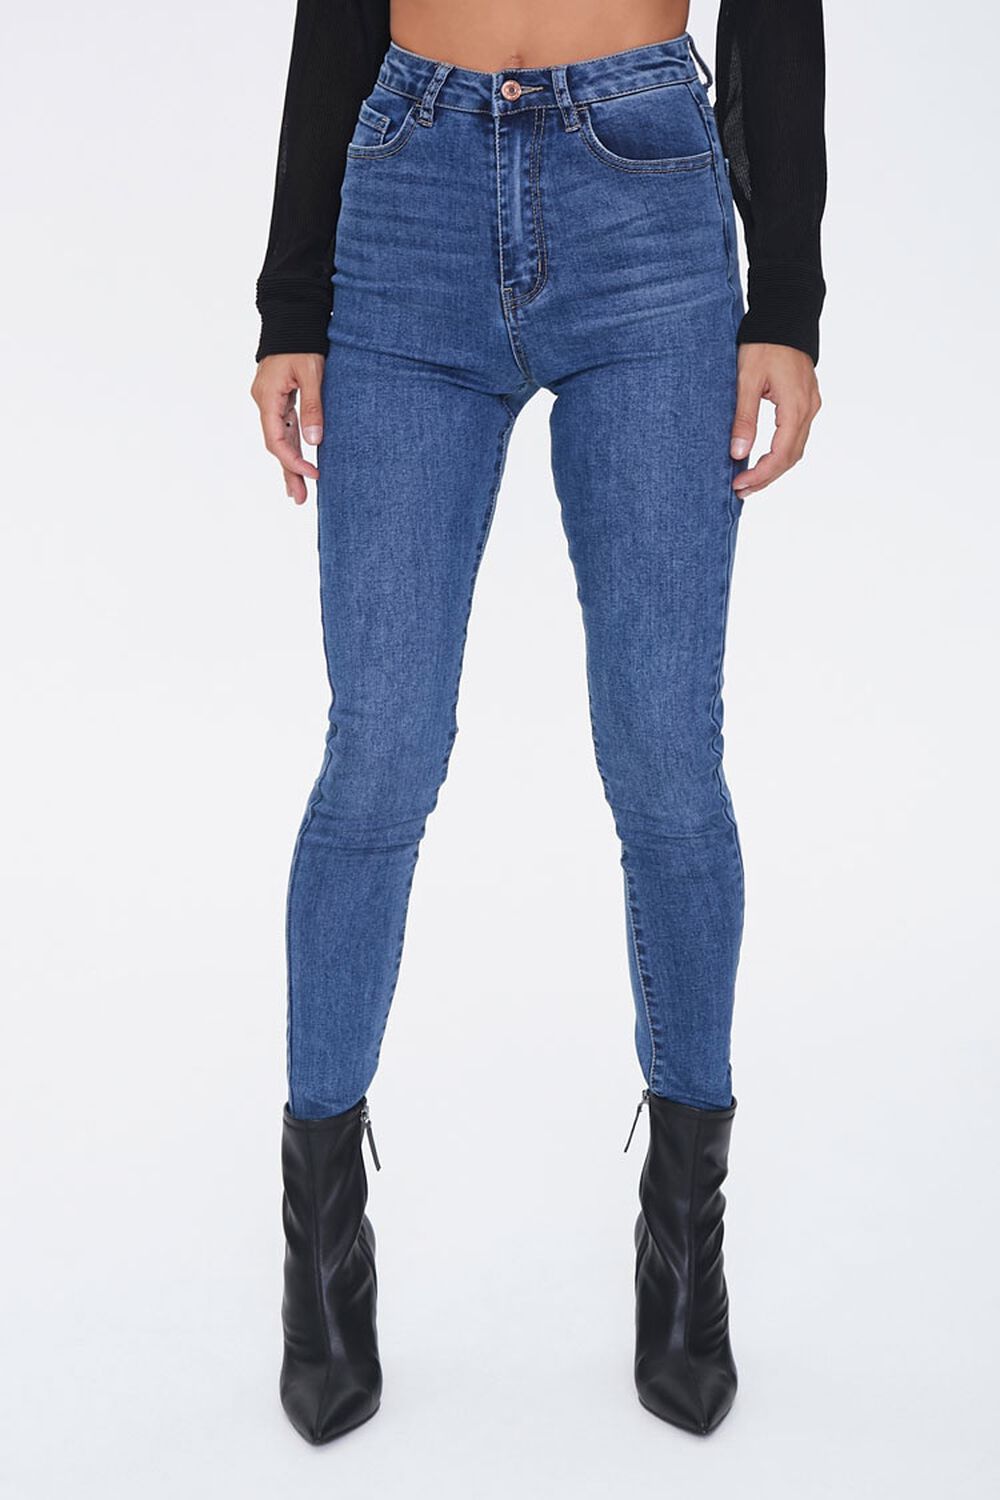 DARK DENIM High-Rise Skinny Jeans, image 2